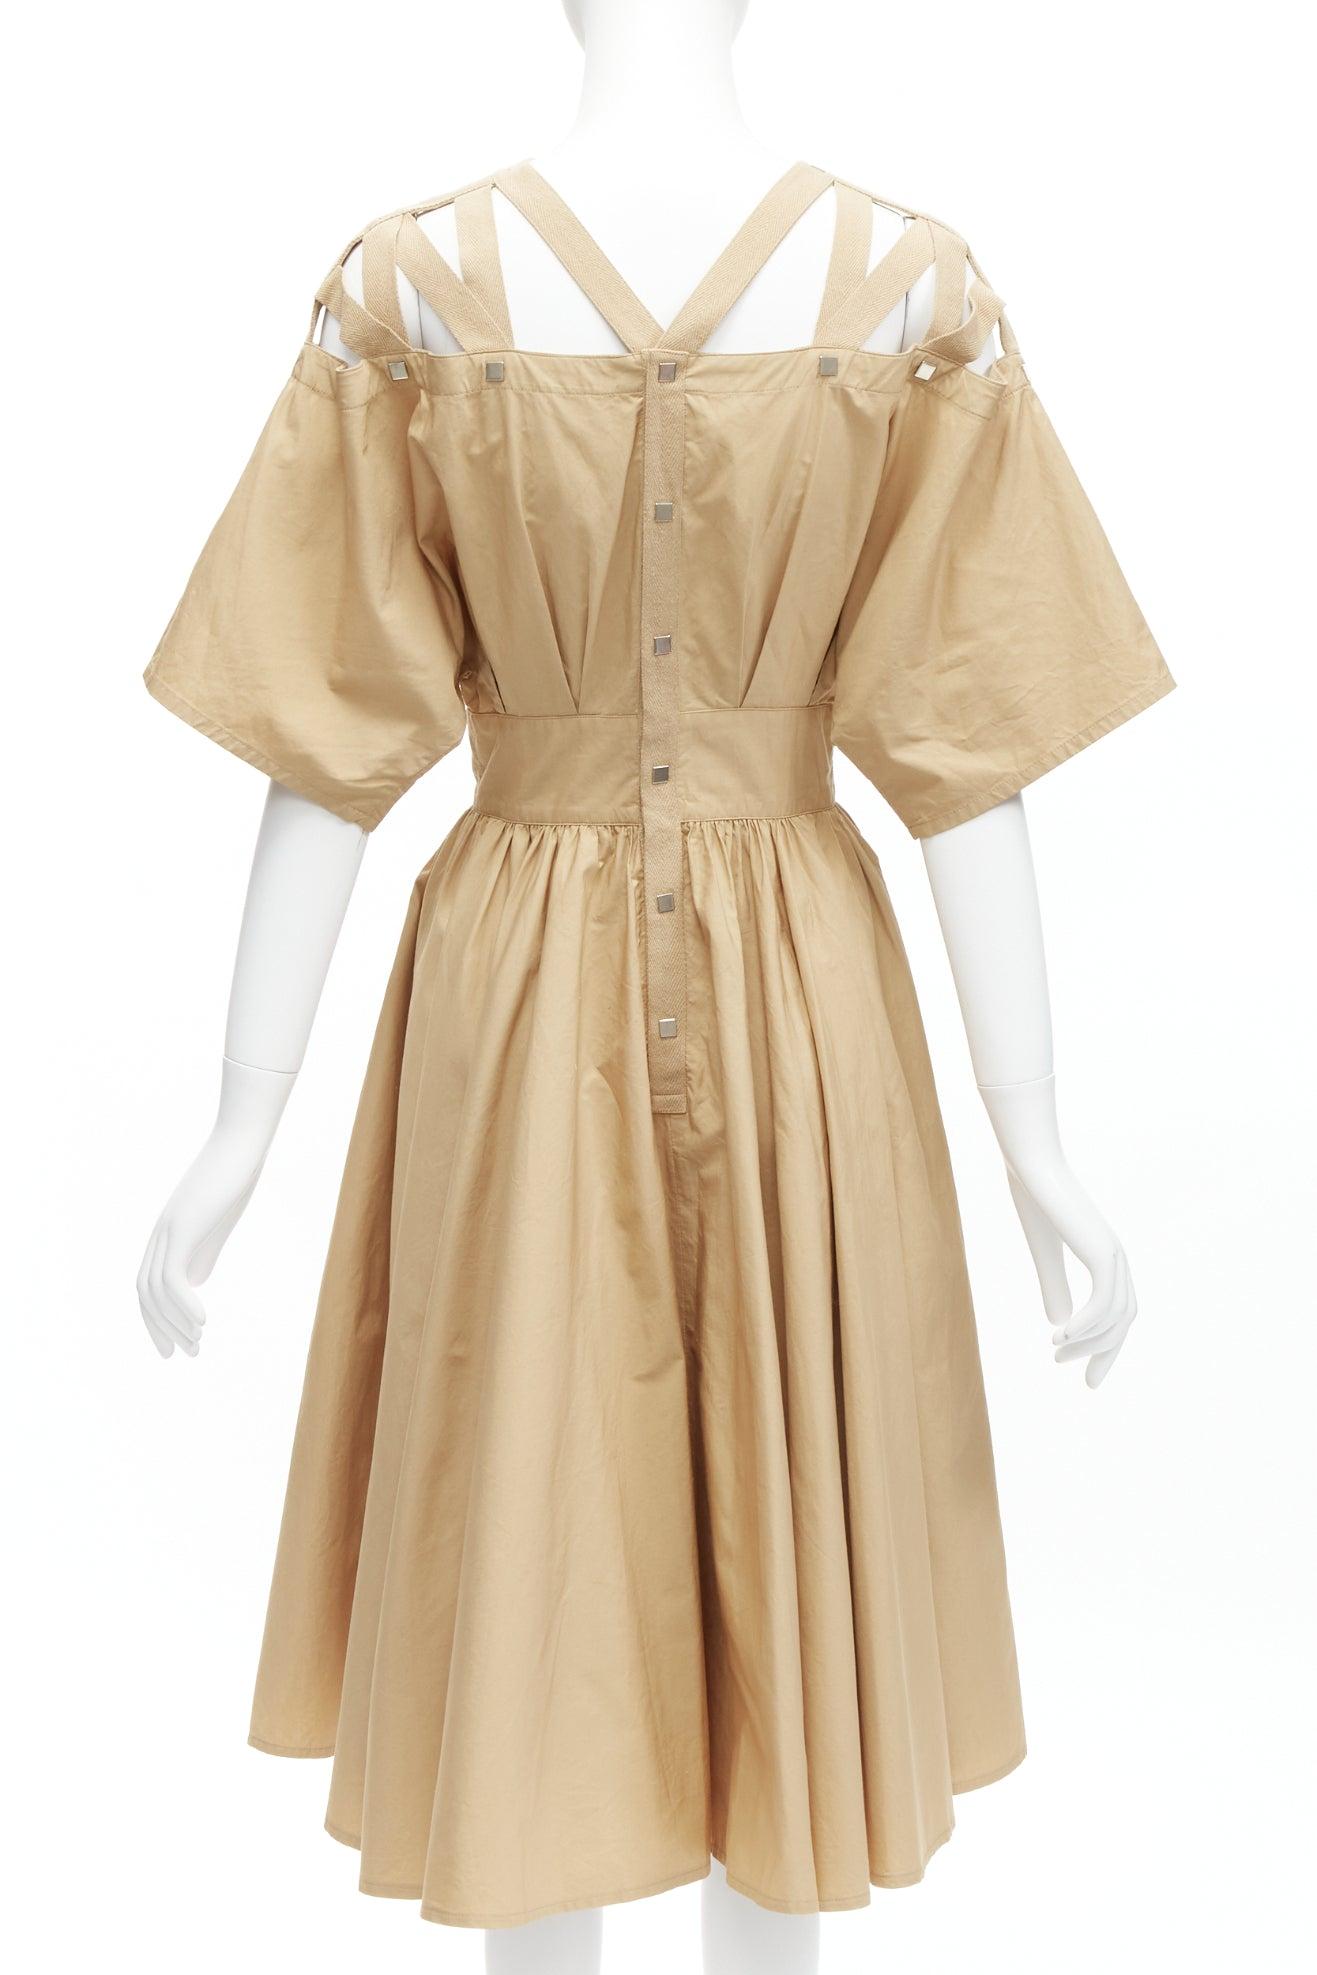 THIERRY MUGLER Vintage cotton strappy shoulder square studs A-line dress IT9A3 S For Sale 1